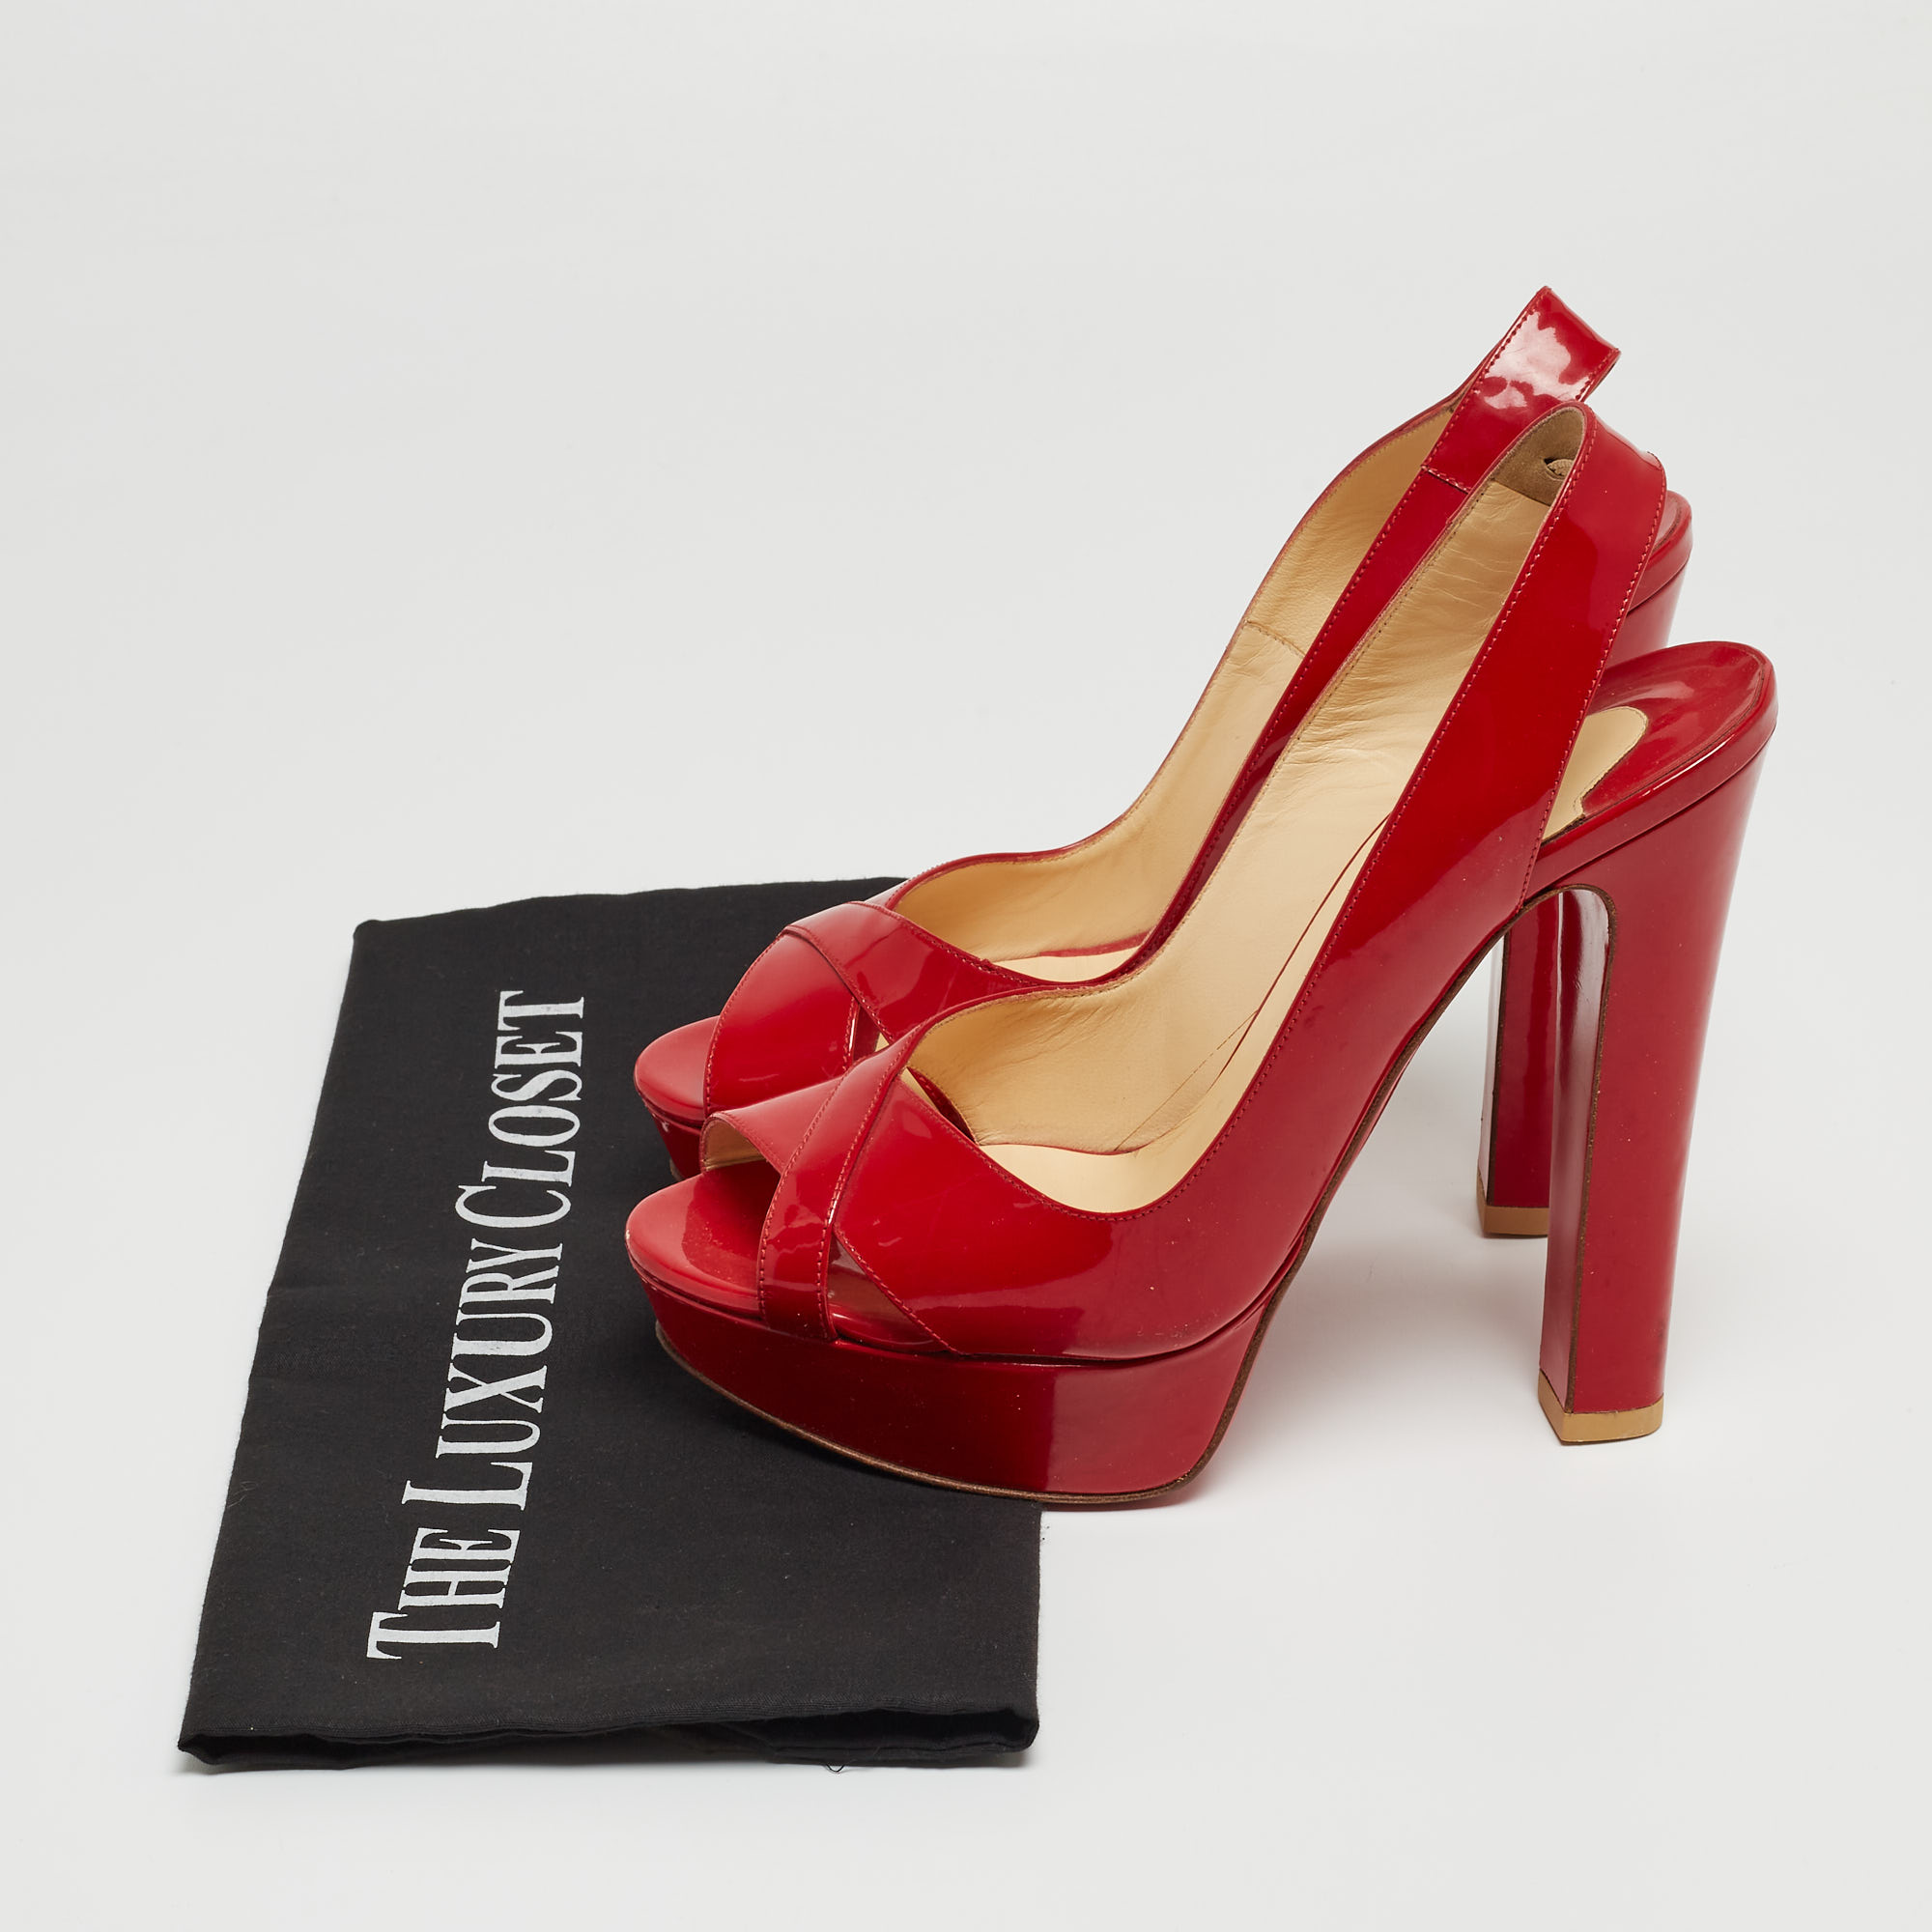 Christian Louboutin Red Patent Leather Marpoil Peep Toe Platform Slingback Sandals Size 37.5